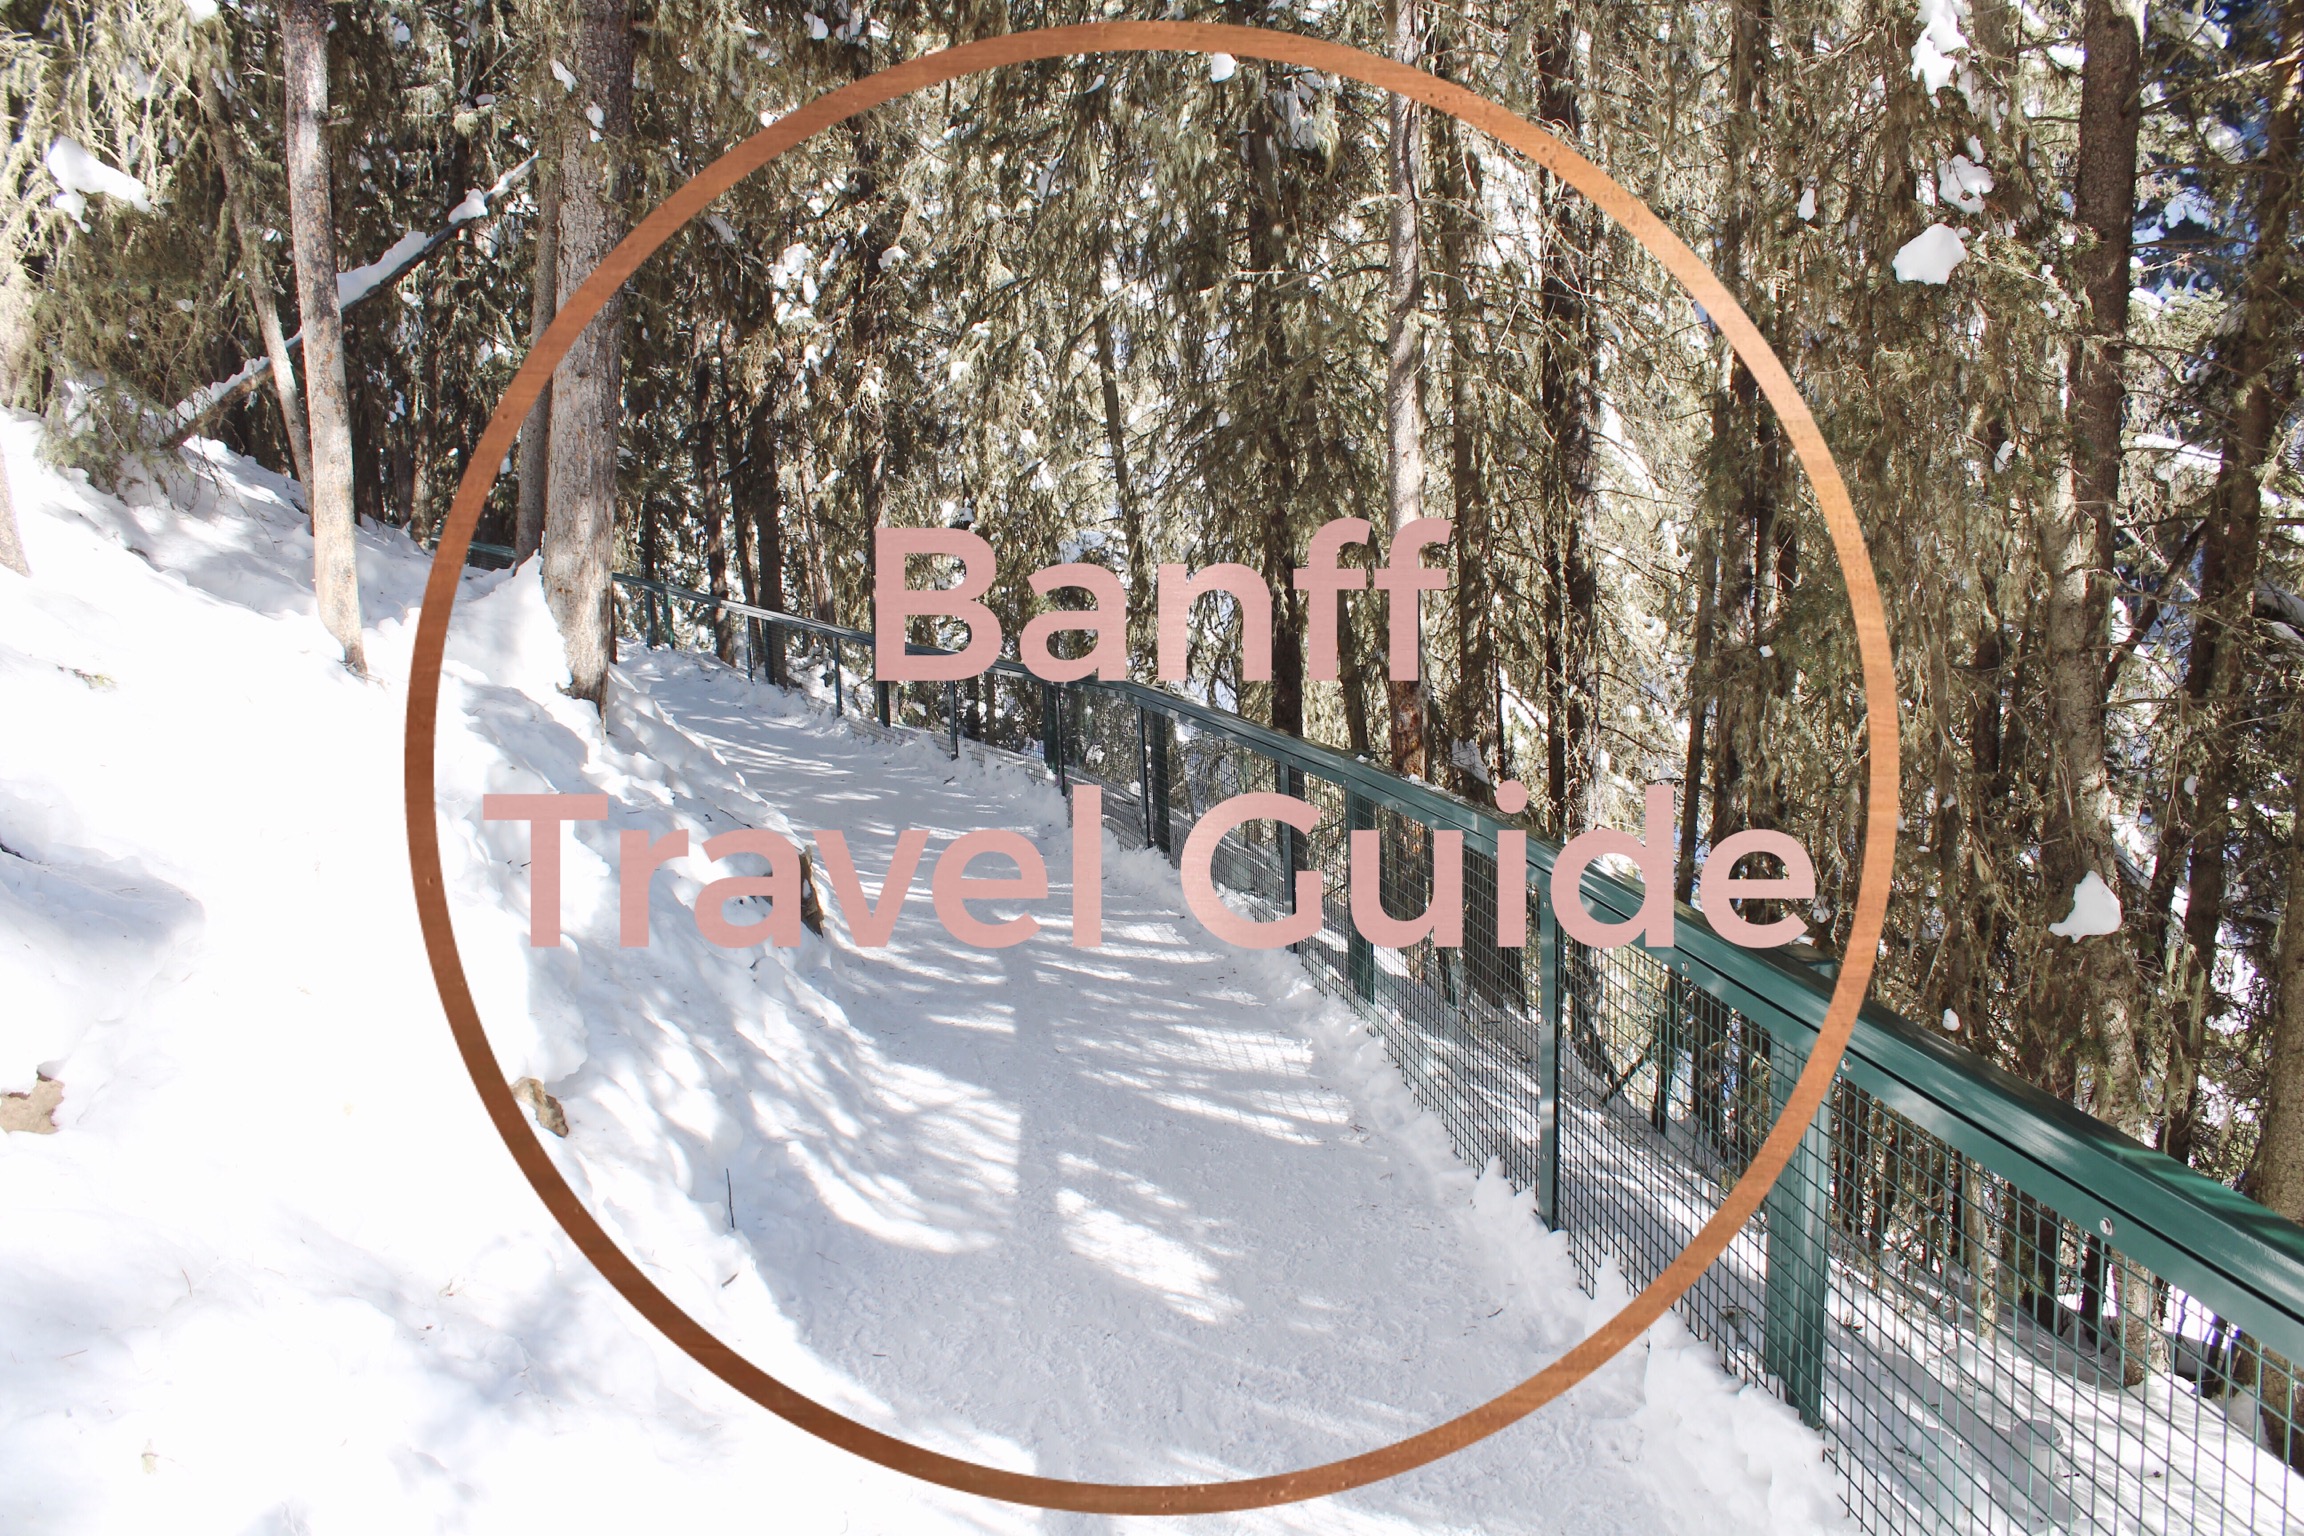 Banff Travel Guide